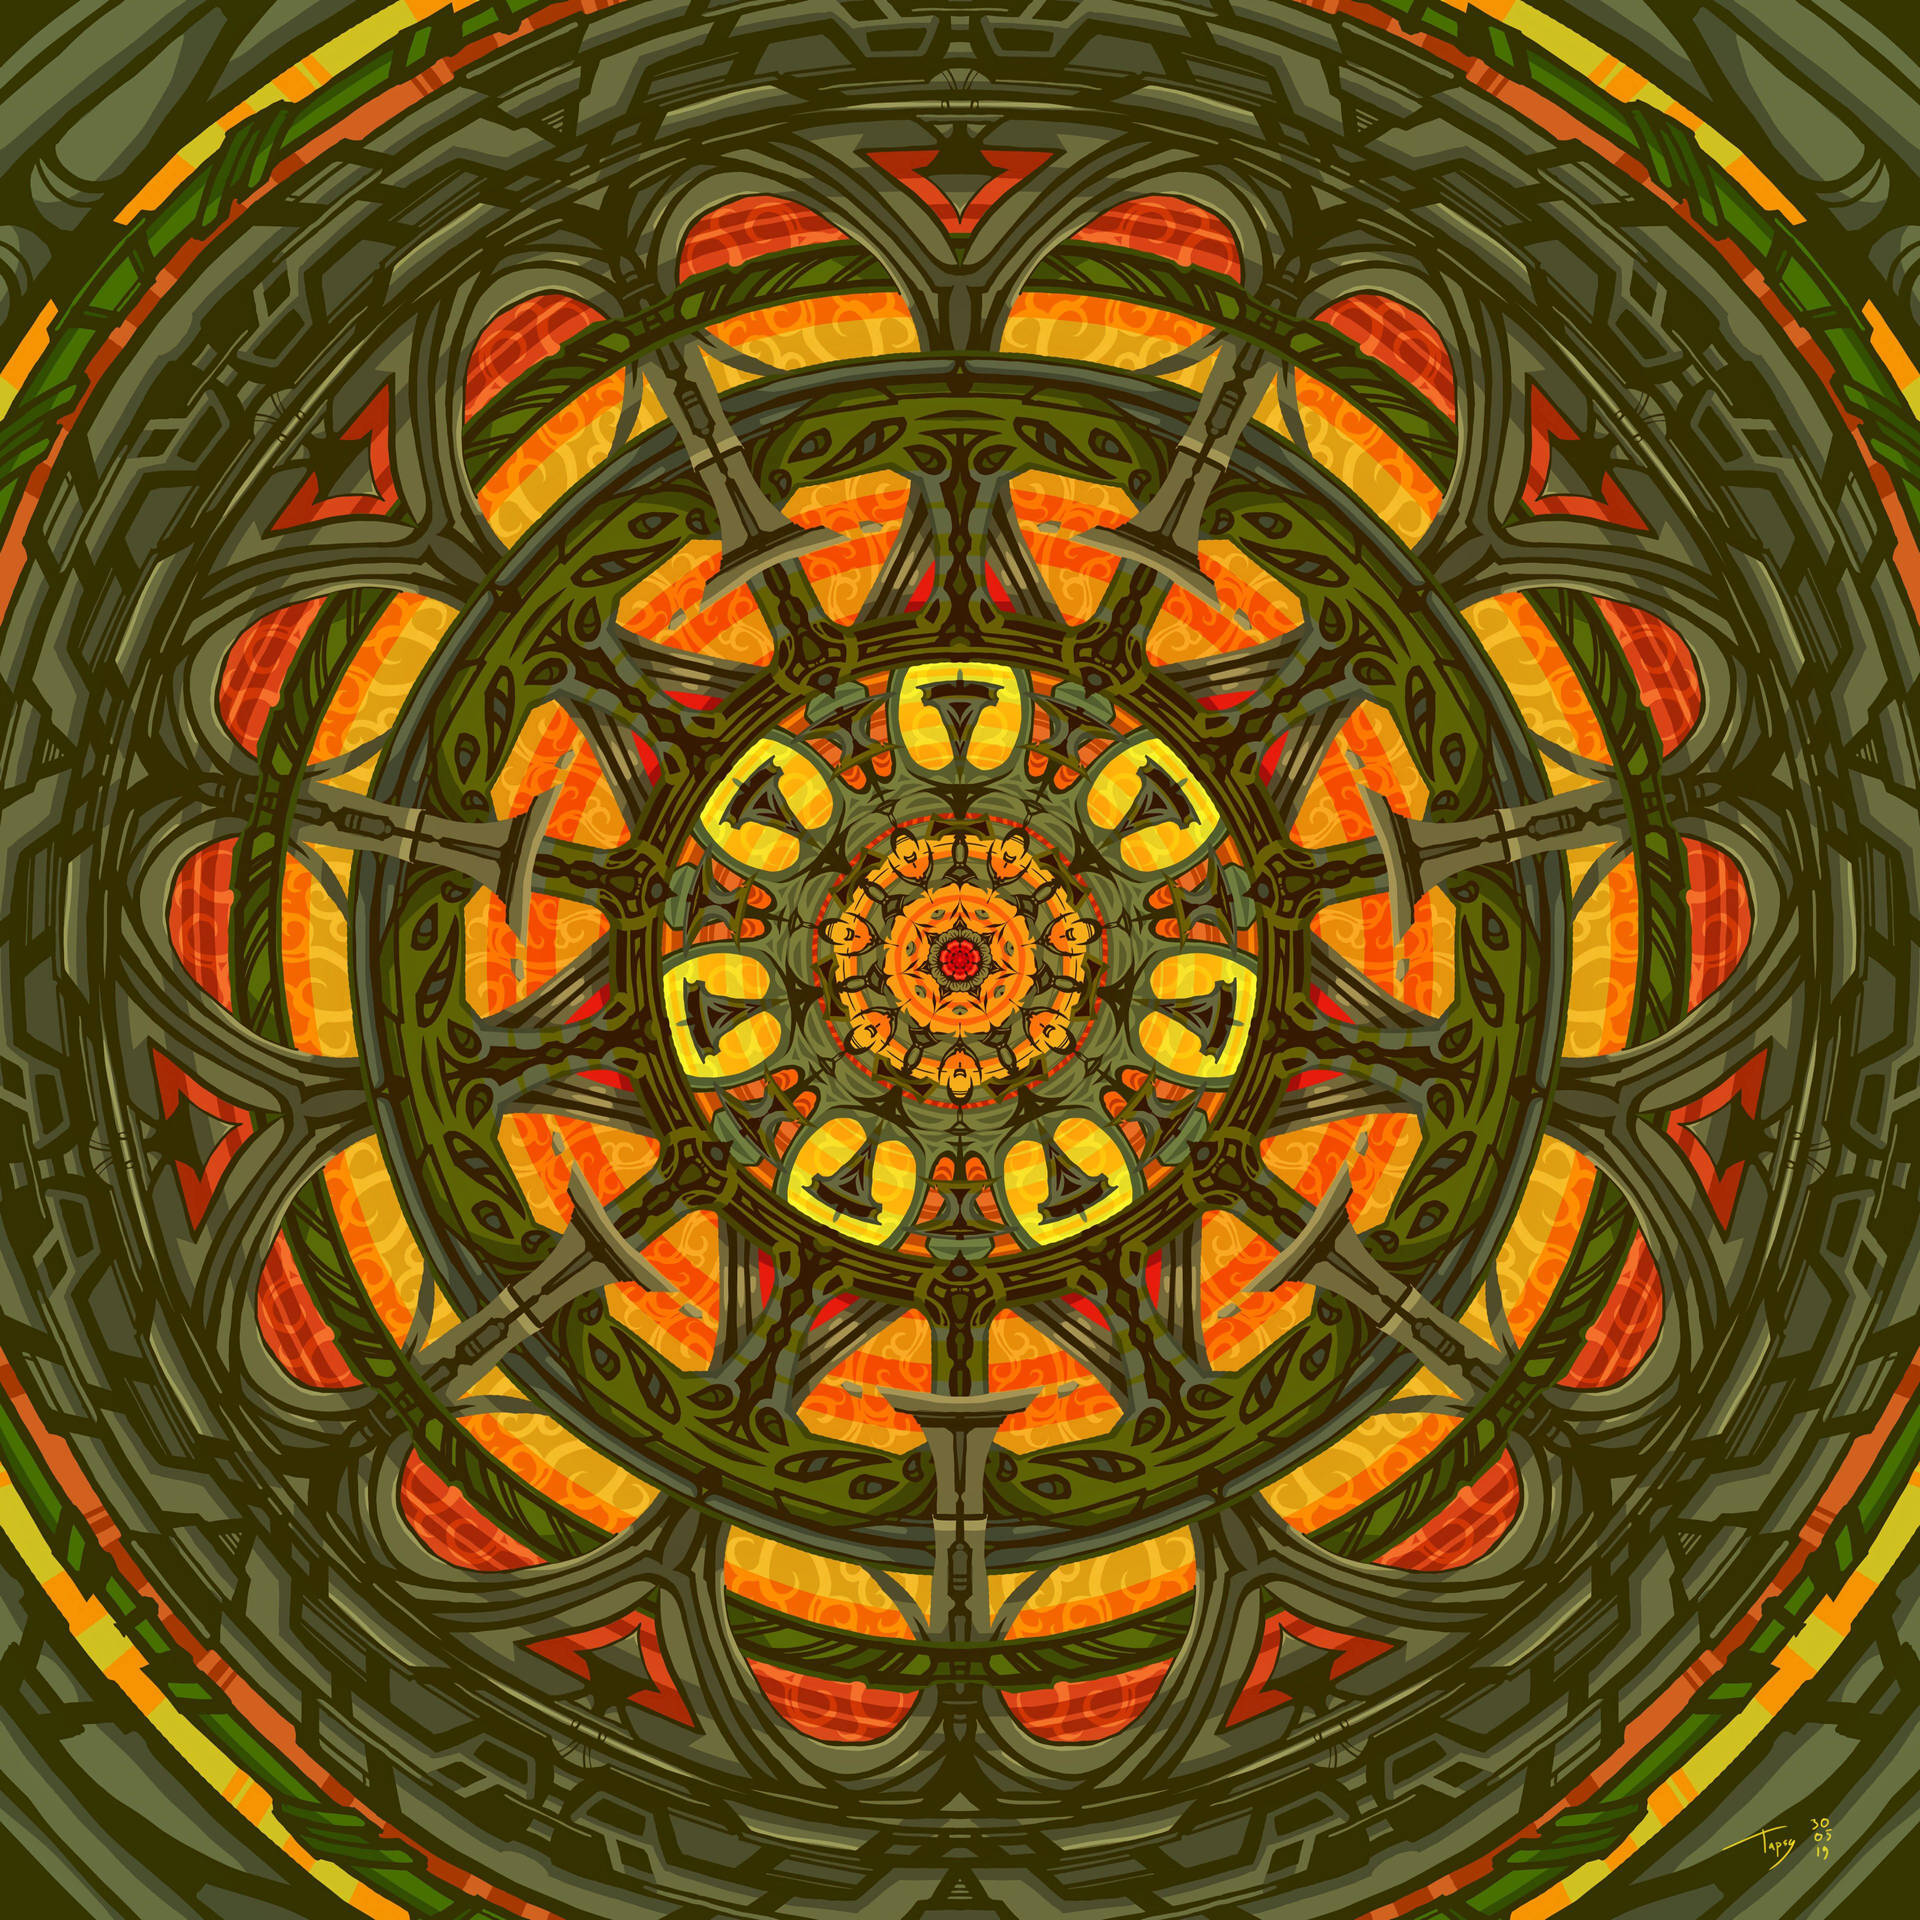 Mandala 3840X3840 Wallpaper and Background Image